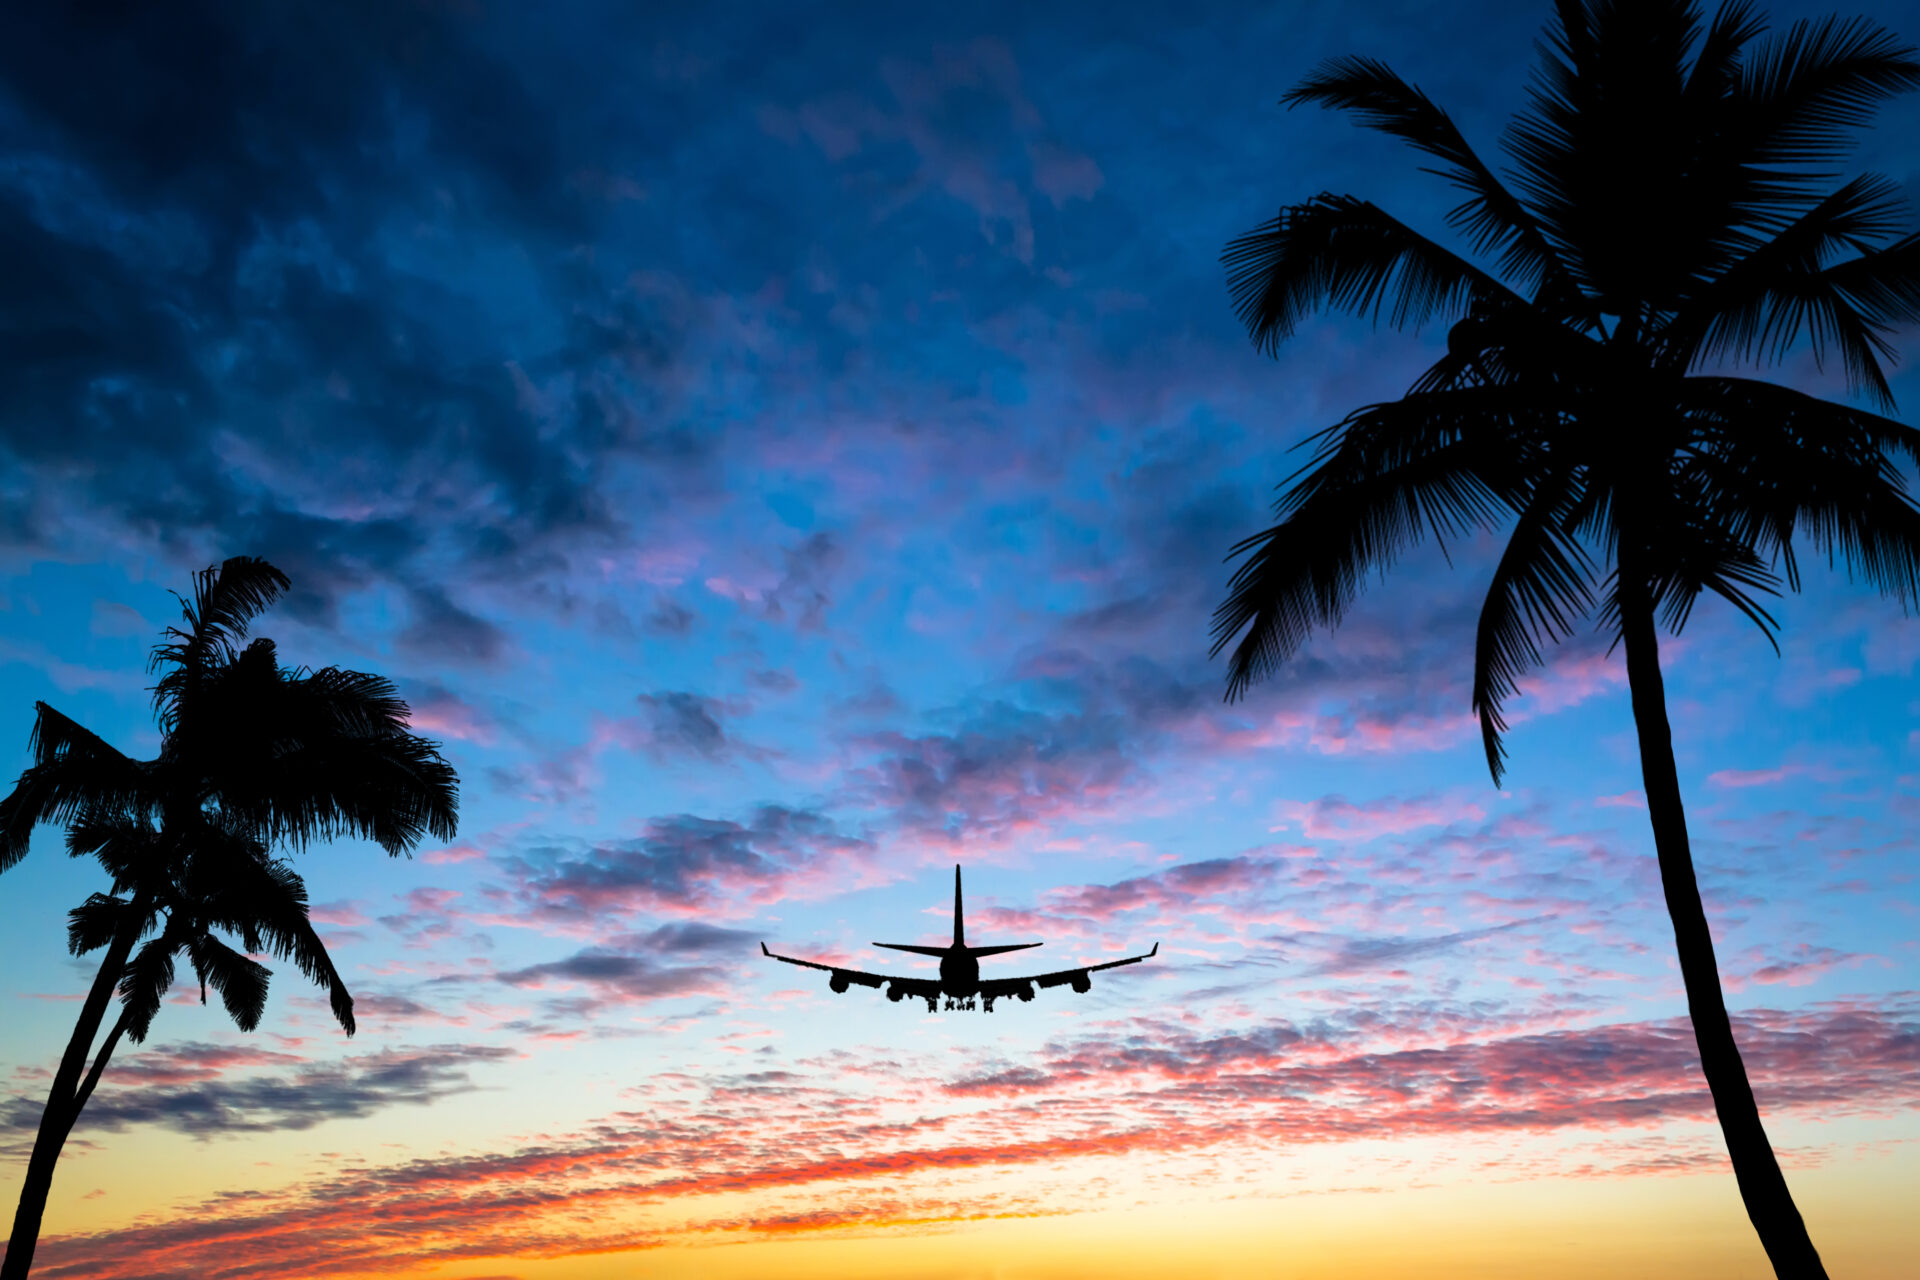 Airplane in Hawaiian skies